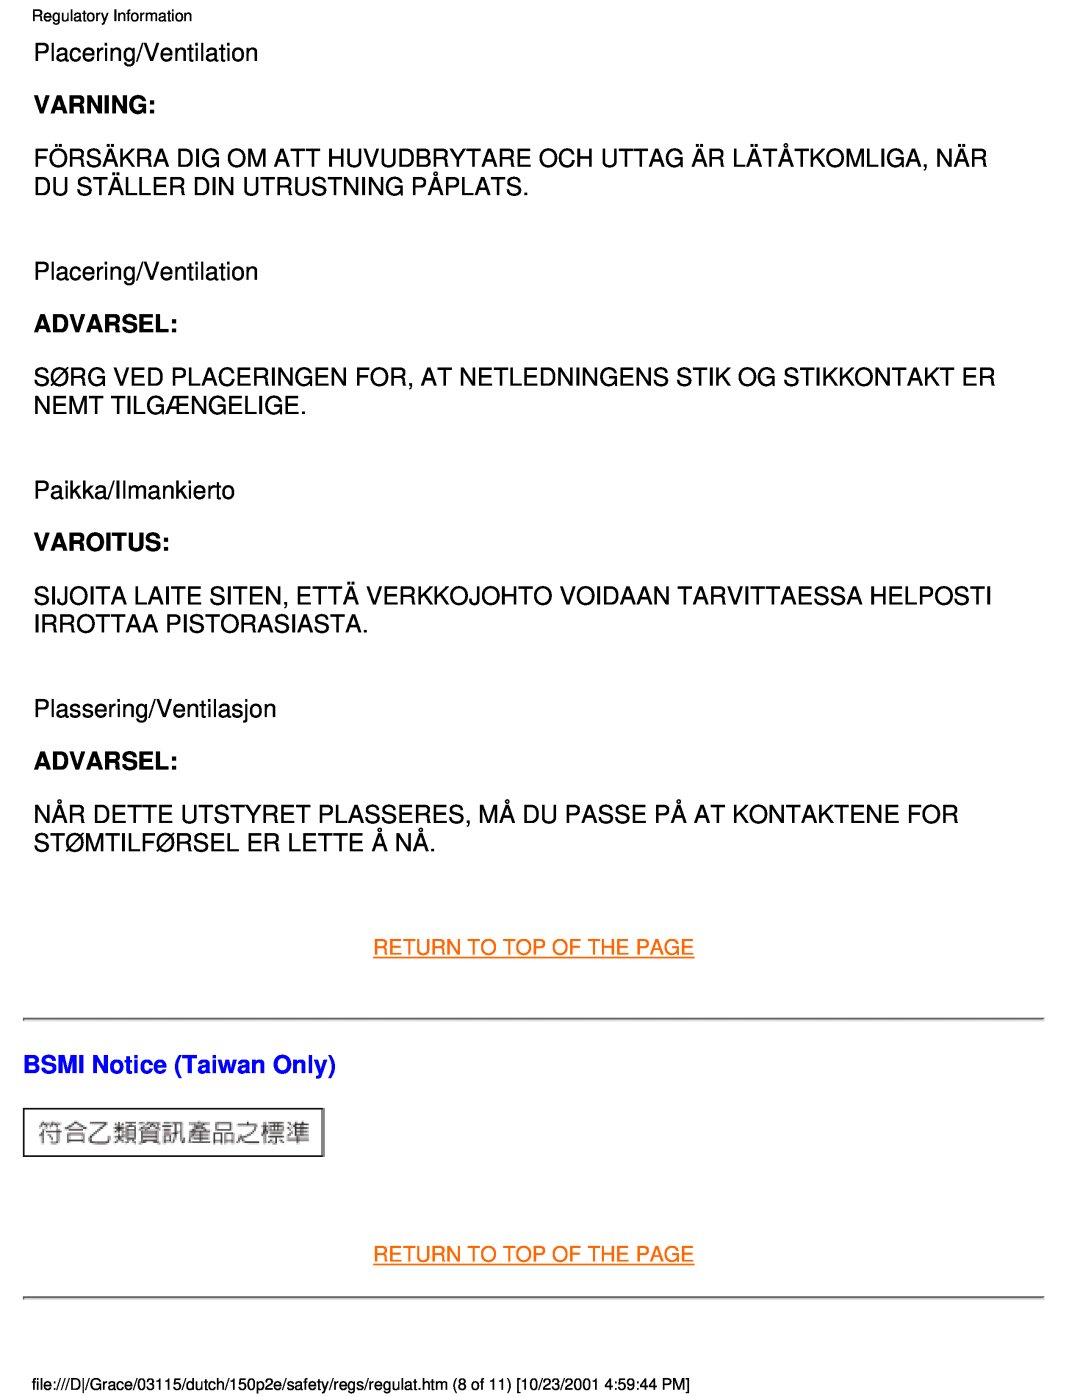 Philips 150P2D user manual Varning, Advarsel, Varoitus, BSMI Notice Taiwan Only 